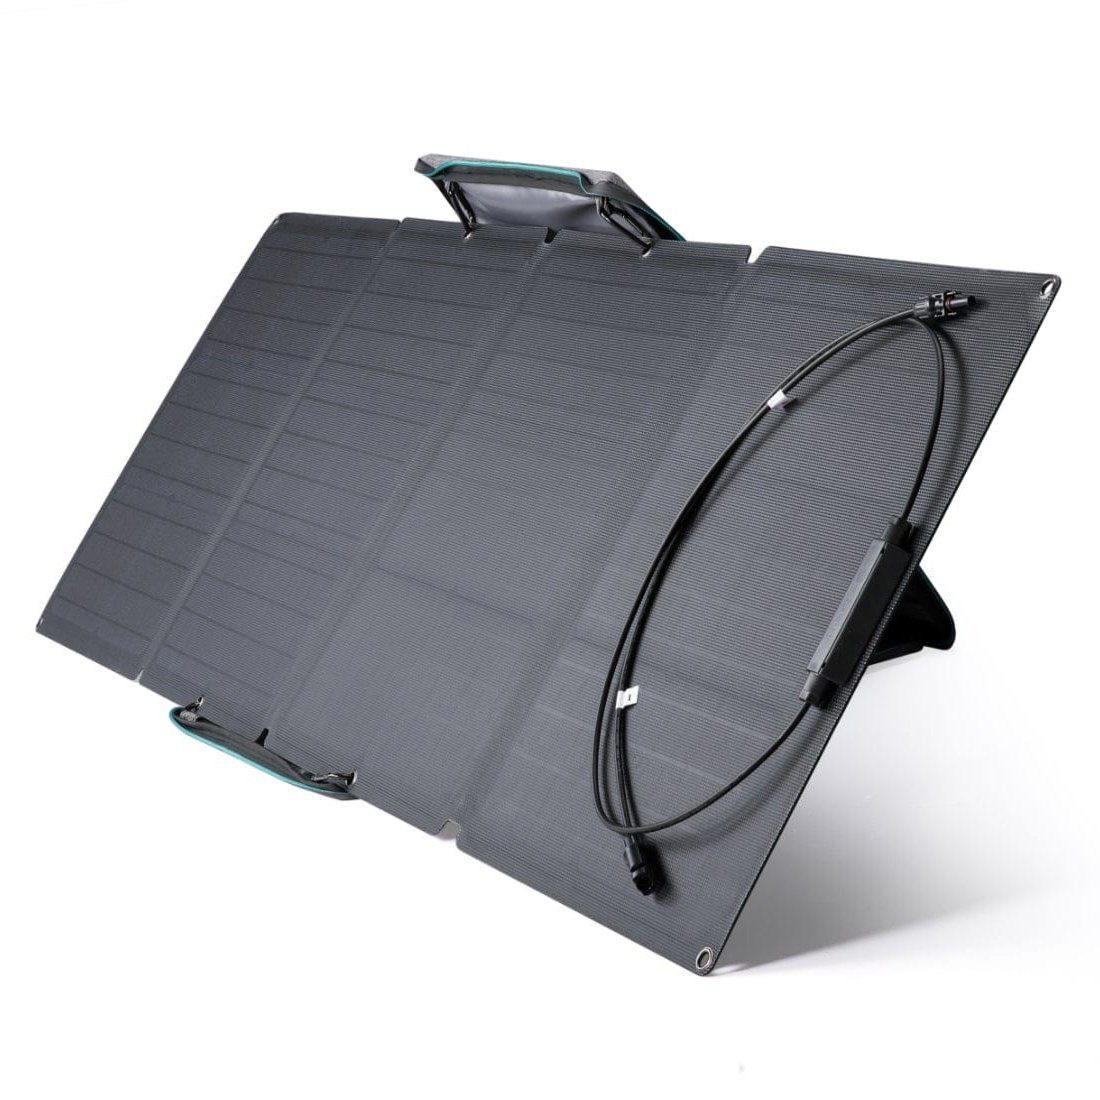 Solarpanel 110W River Ecoflow 2 Smart-Home-Station Powerstation Ecoflow mit